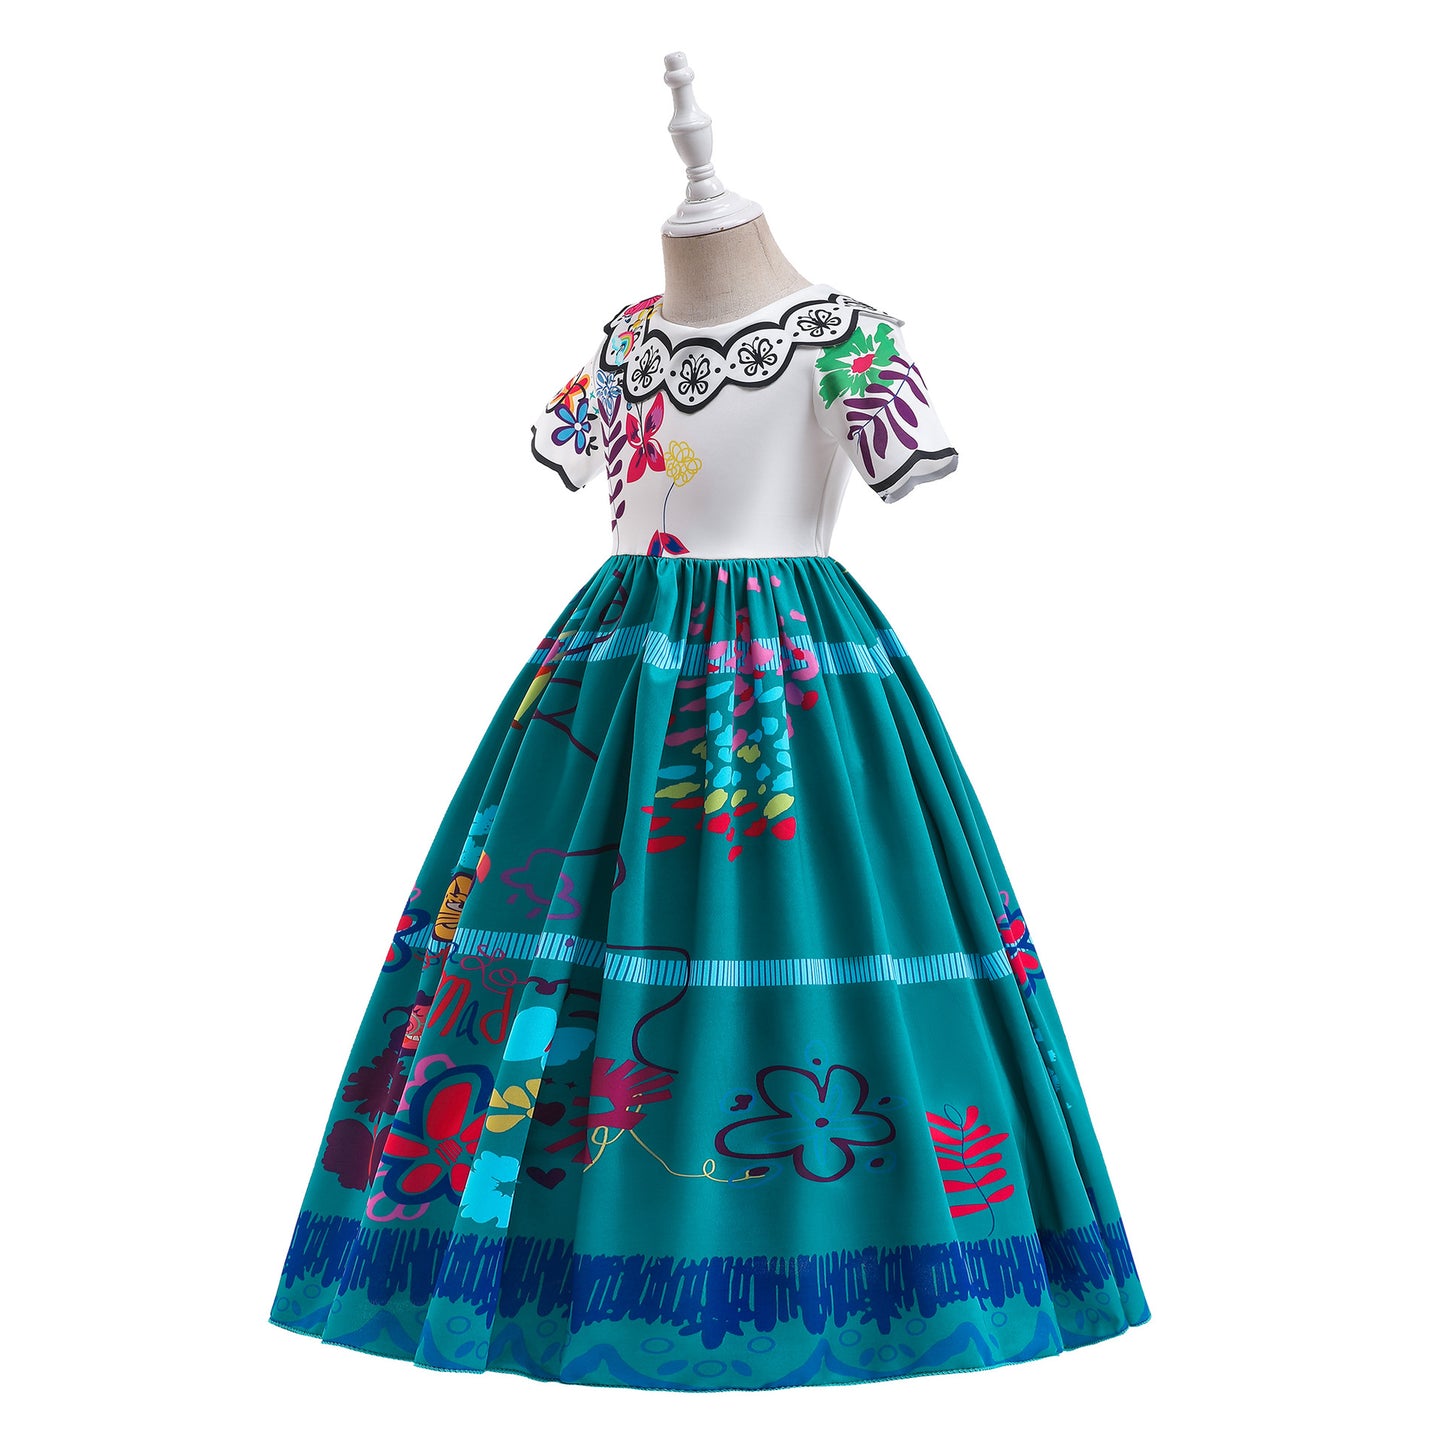 Encanto Costume Mirabel Princess Cosplay Floral Printed Girls Birthday Fancy Dress